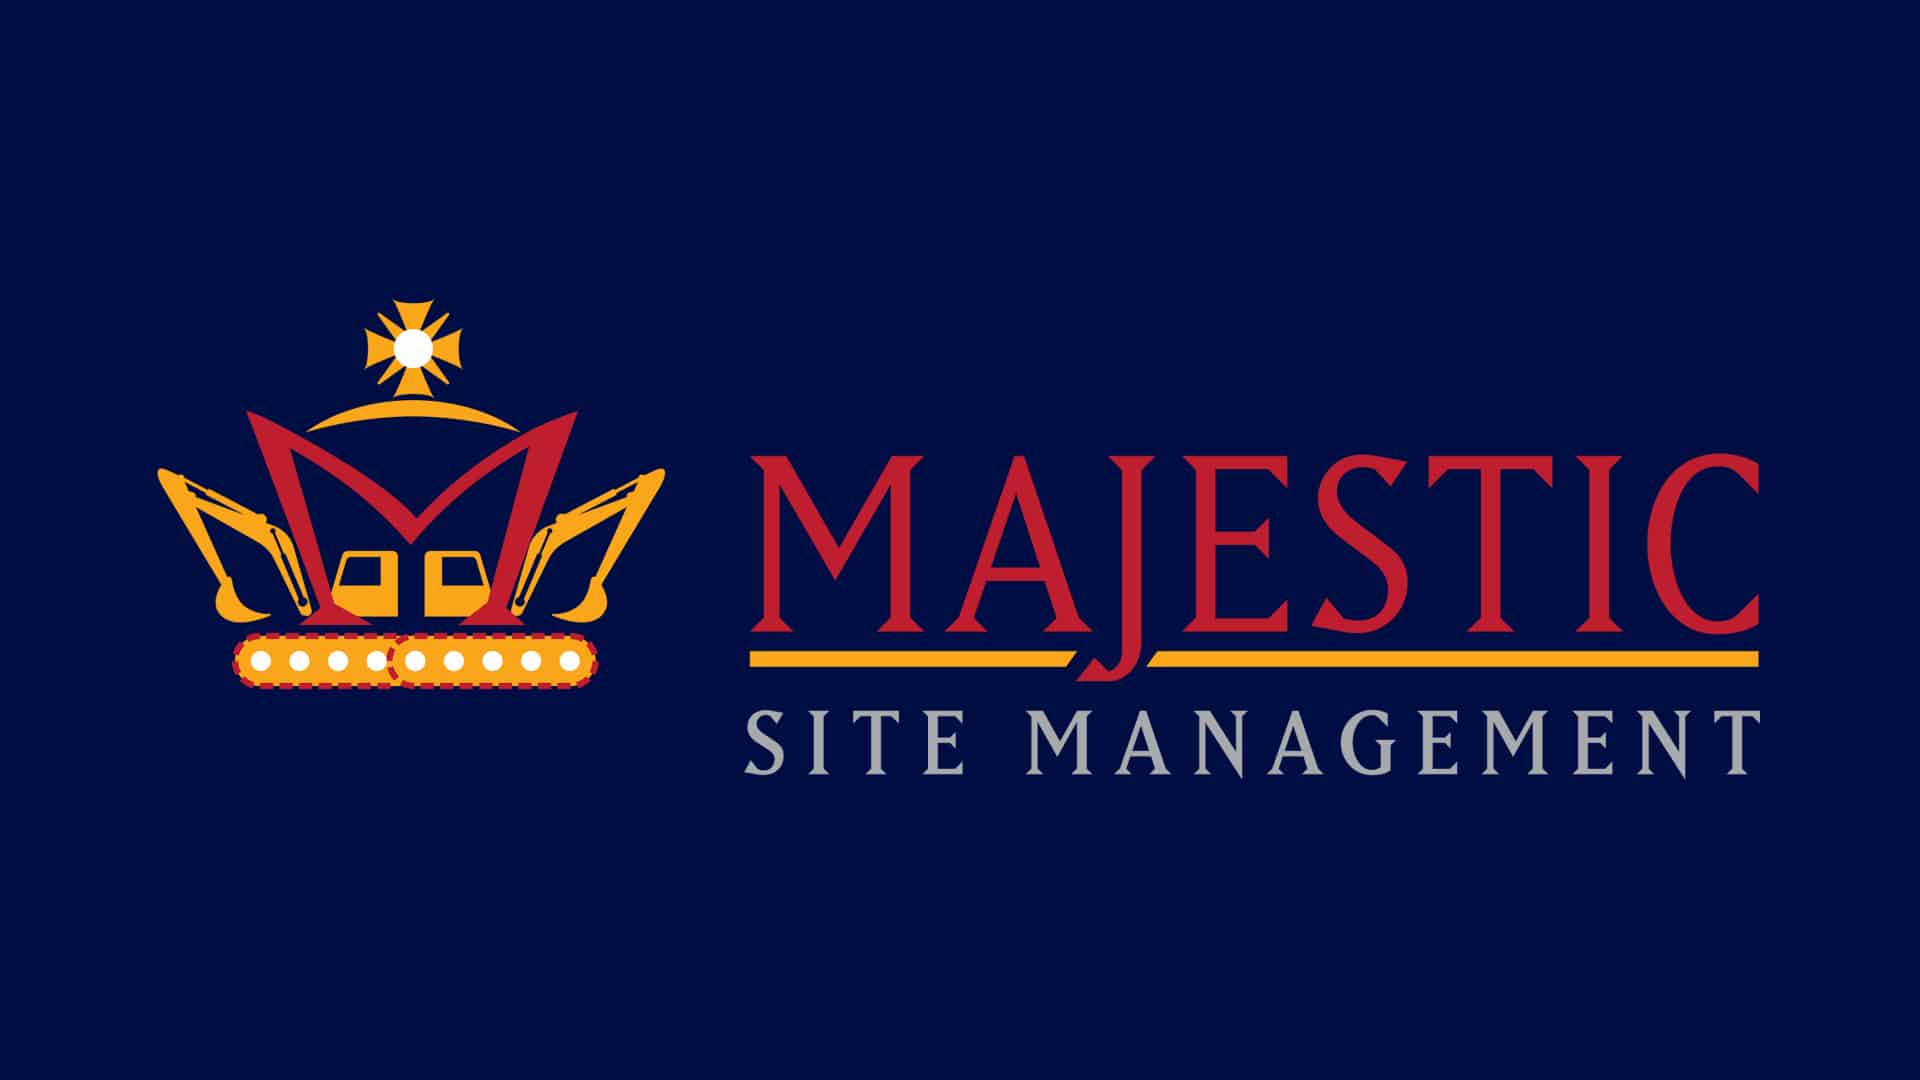 Majestic Site Management navy logo